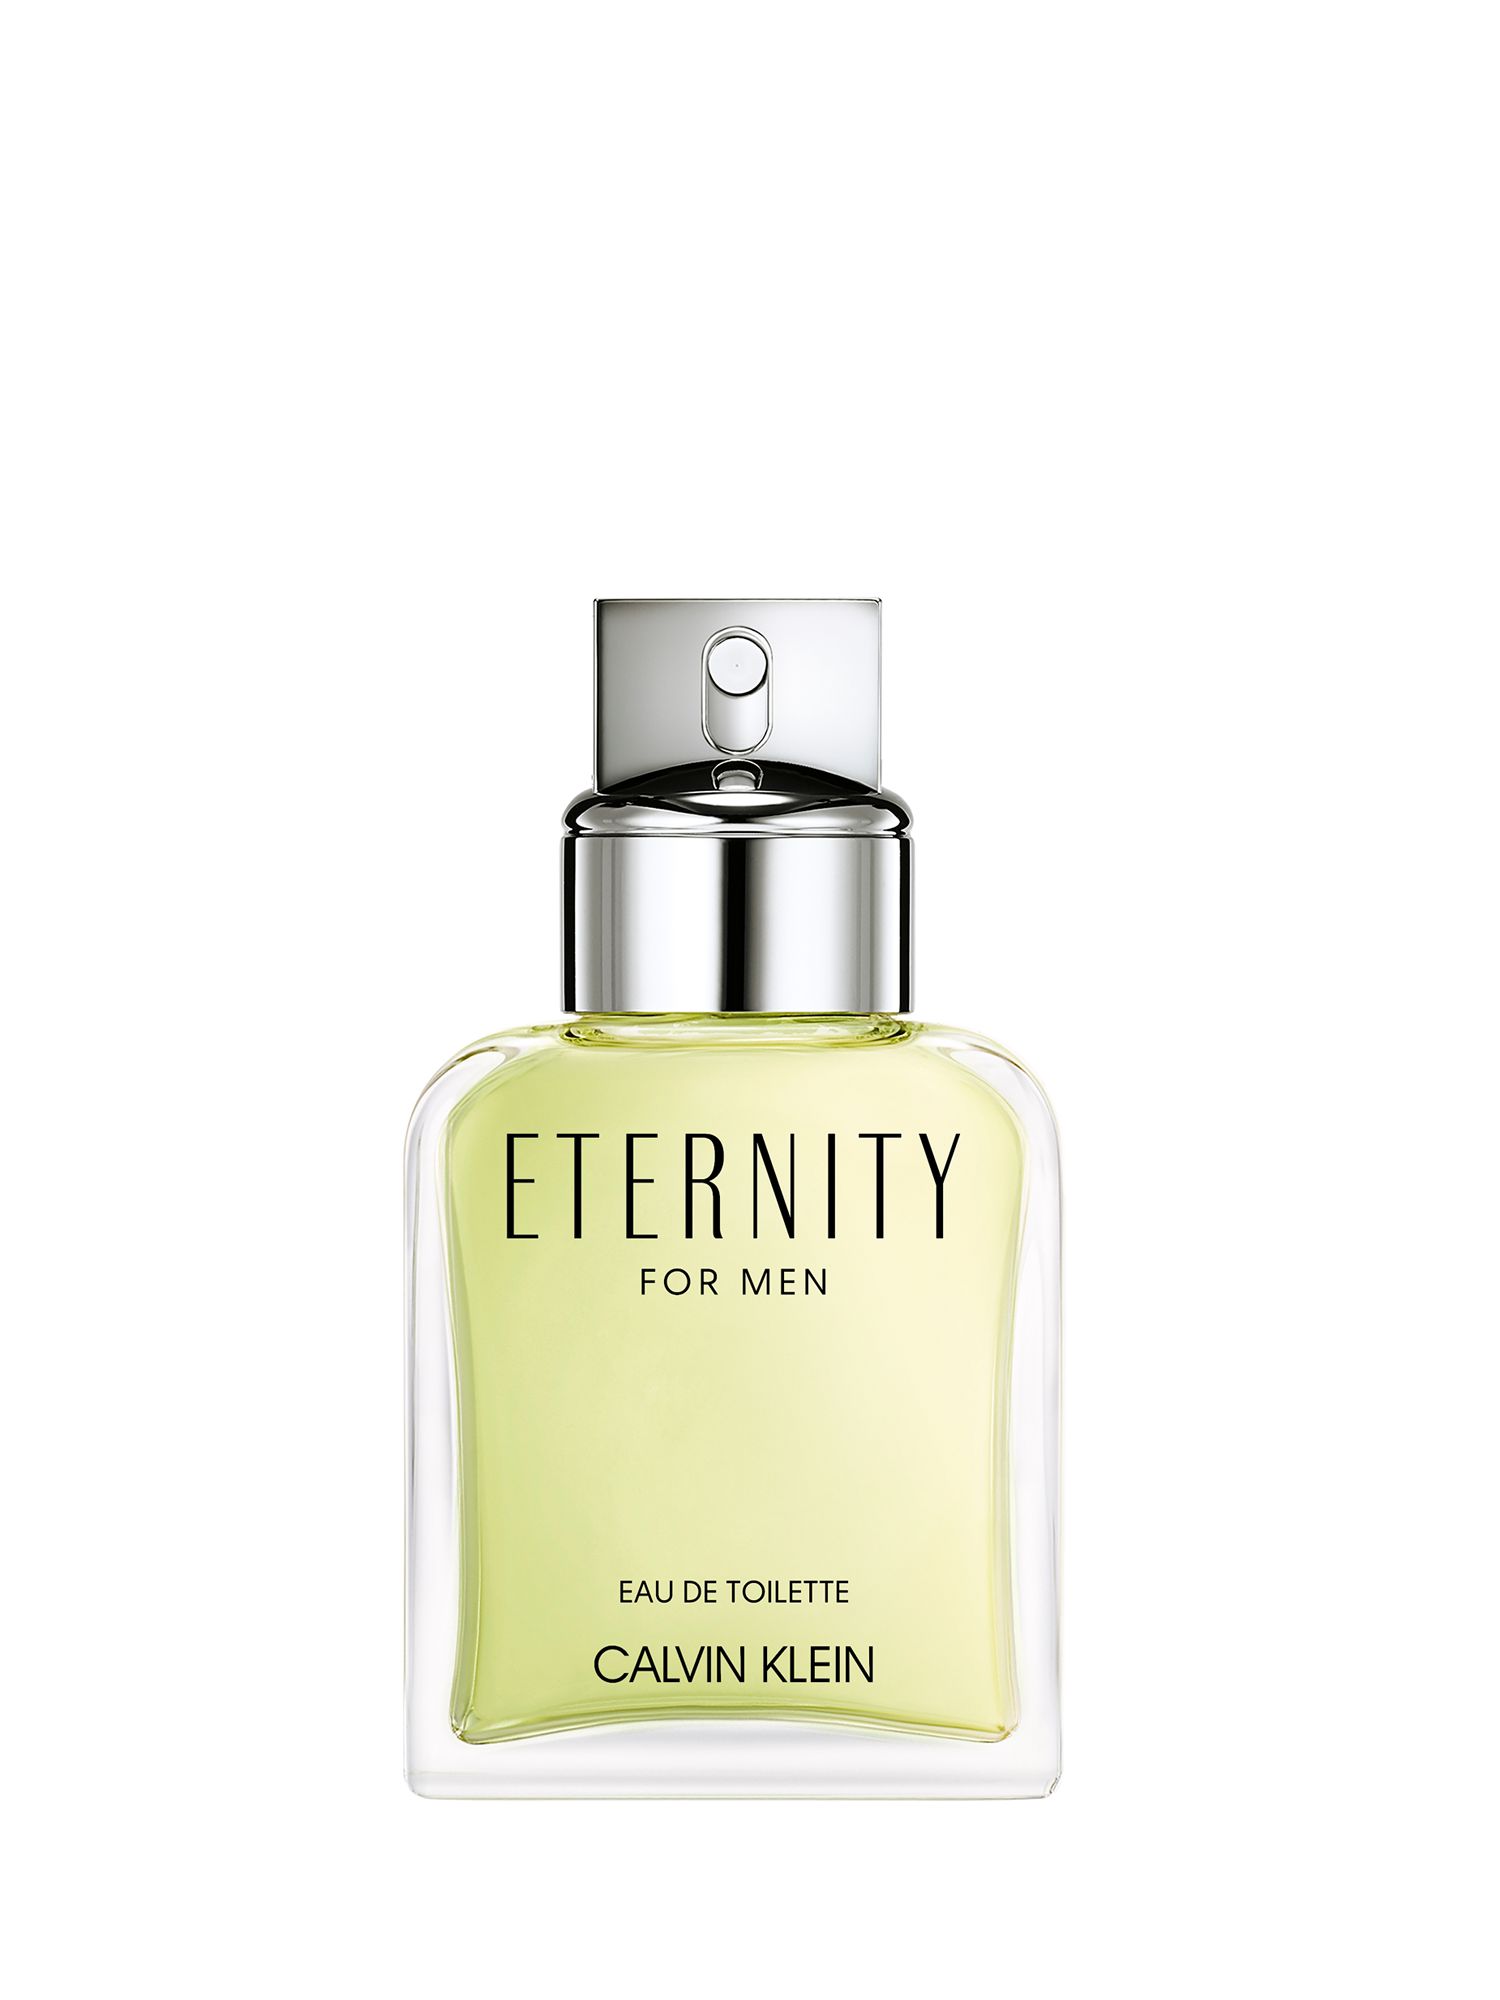 Calvin Klein Eternity for Men, Eau de Toilette Spray, 50ml